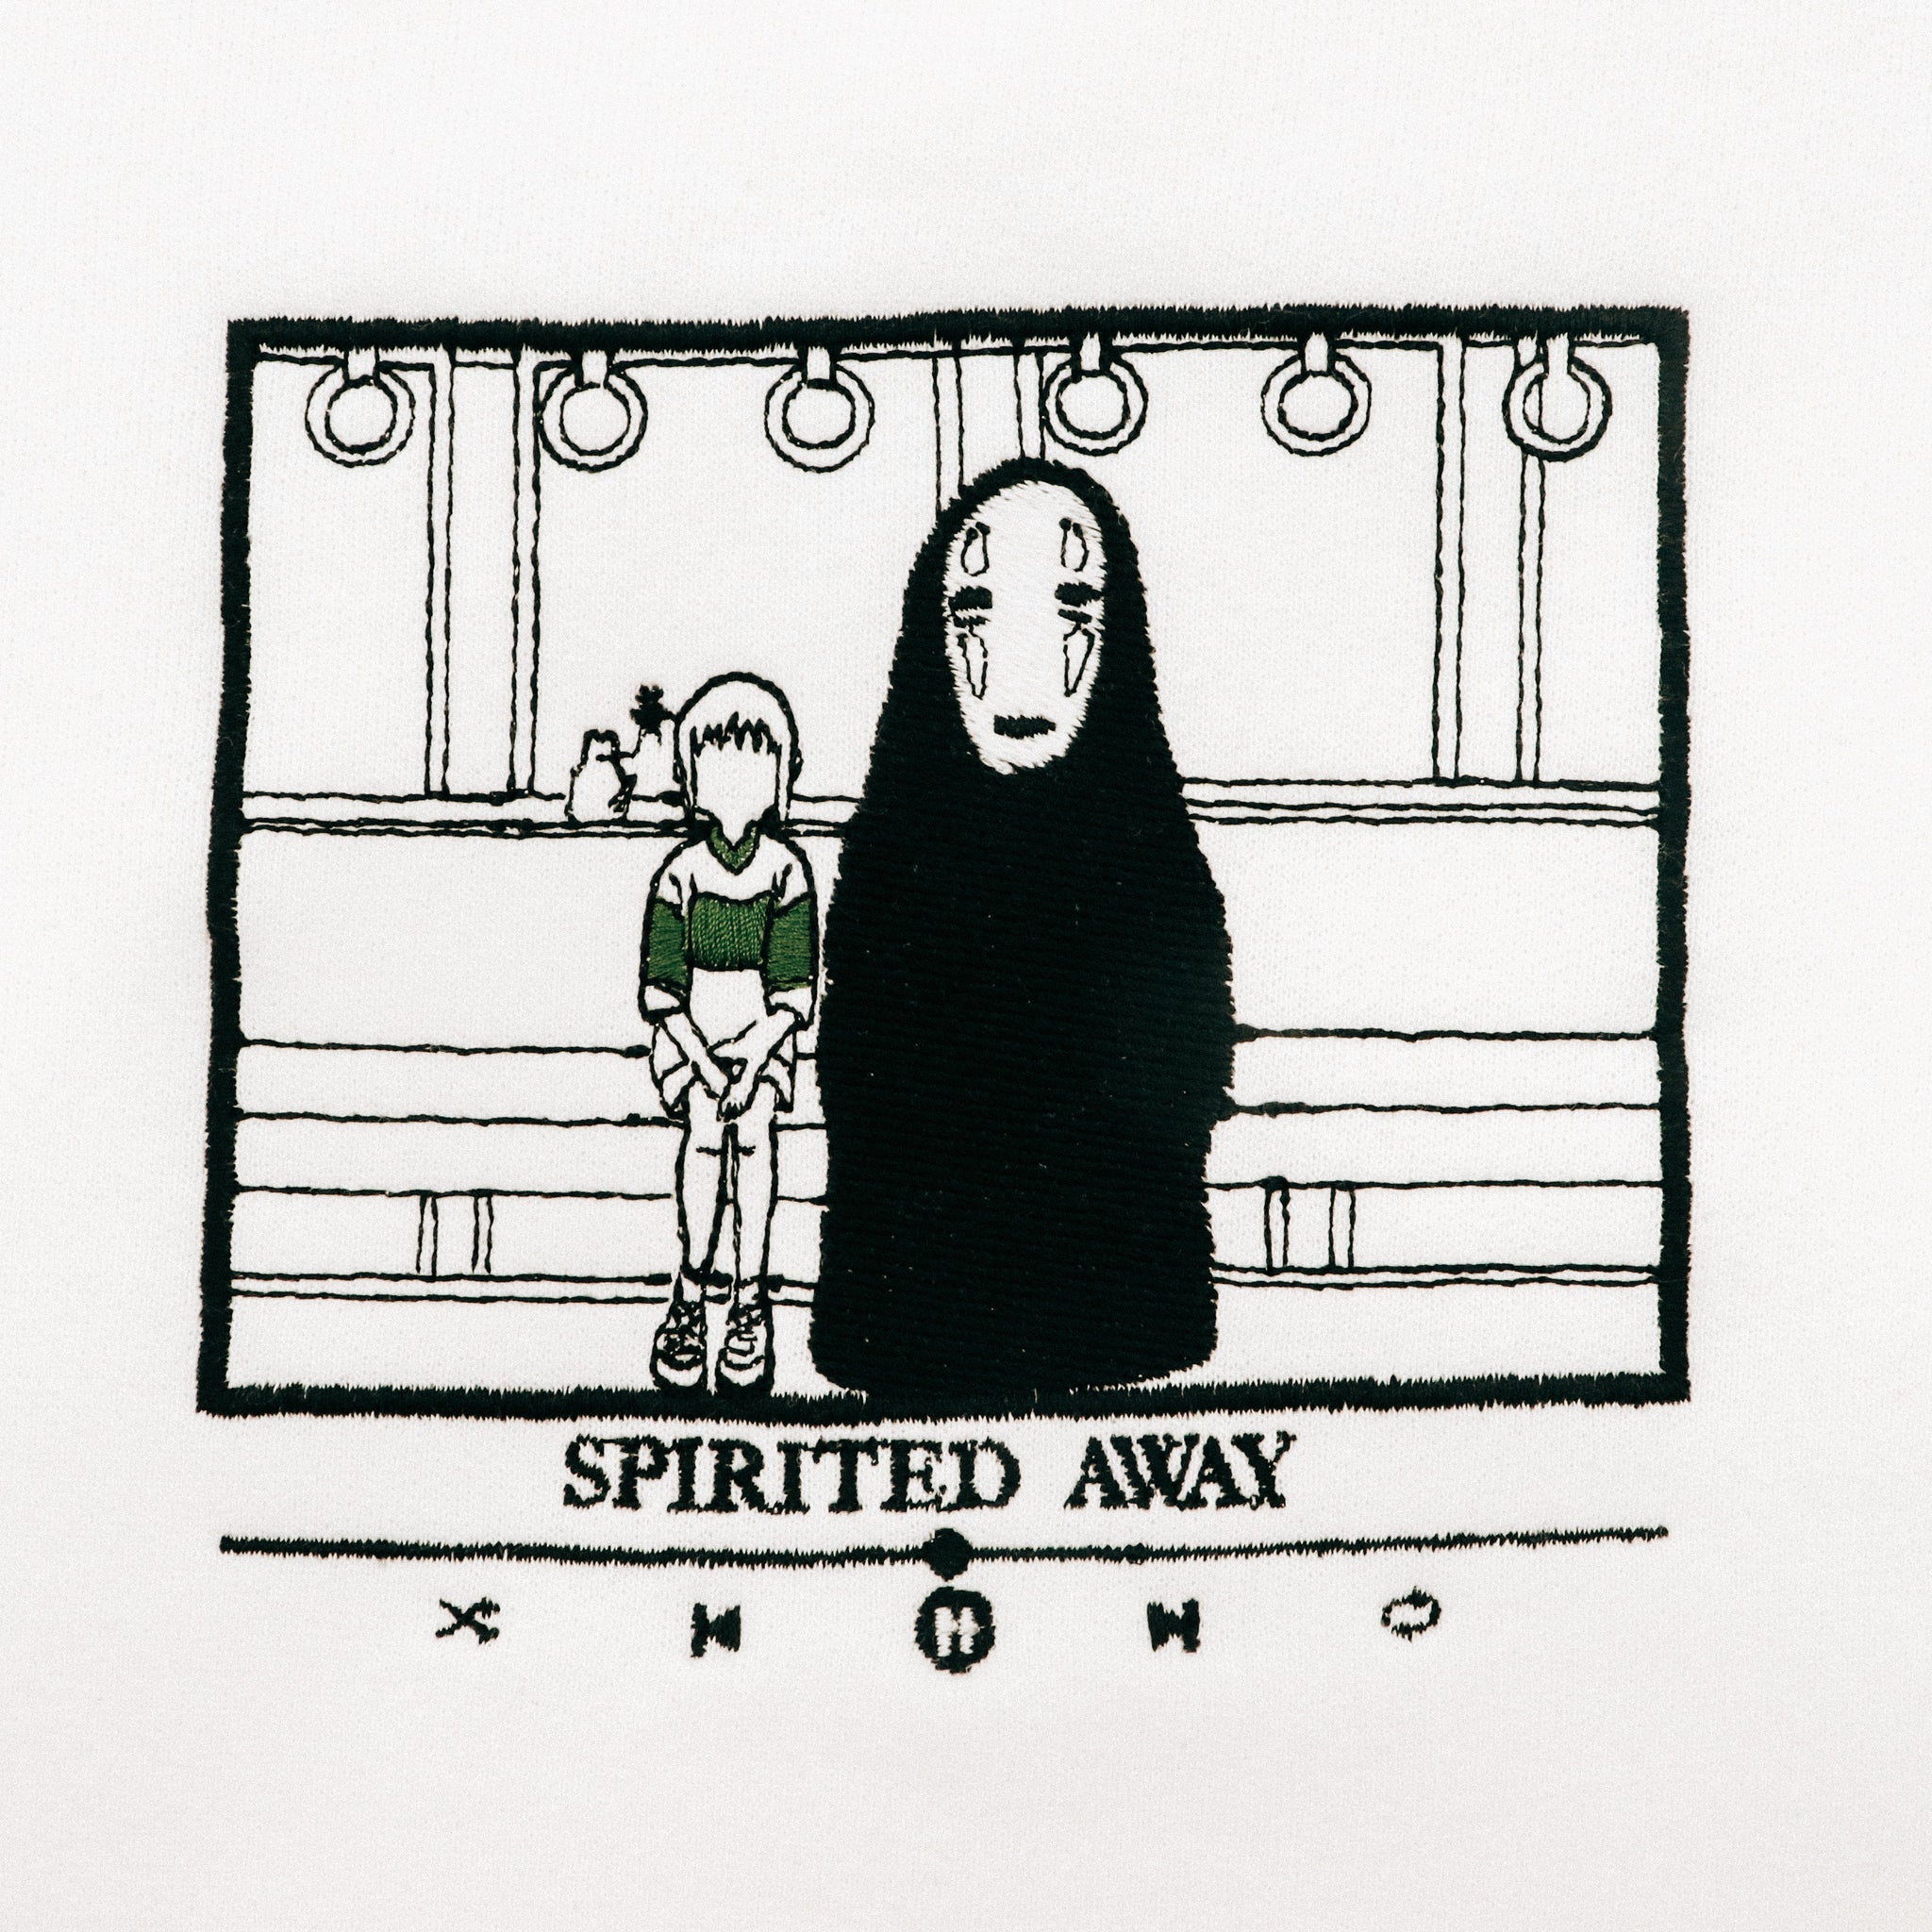 Spirited Away - Chihiro lost in city - Spirited Away Pullover Sweatshirt  RB2212 - ®Studio Ghibli Shop